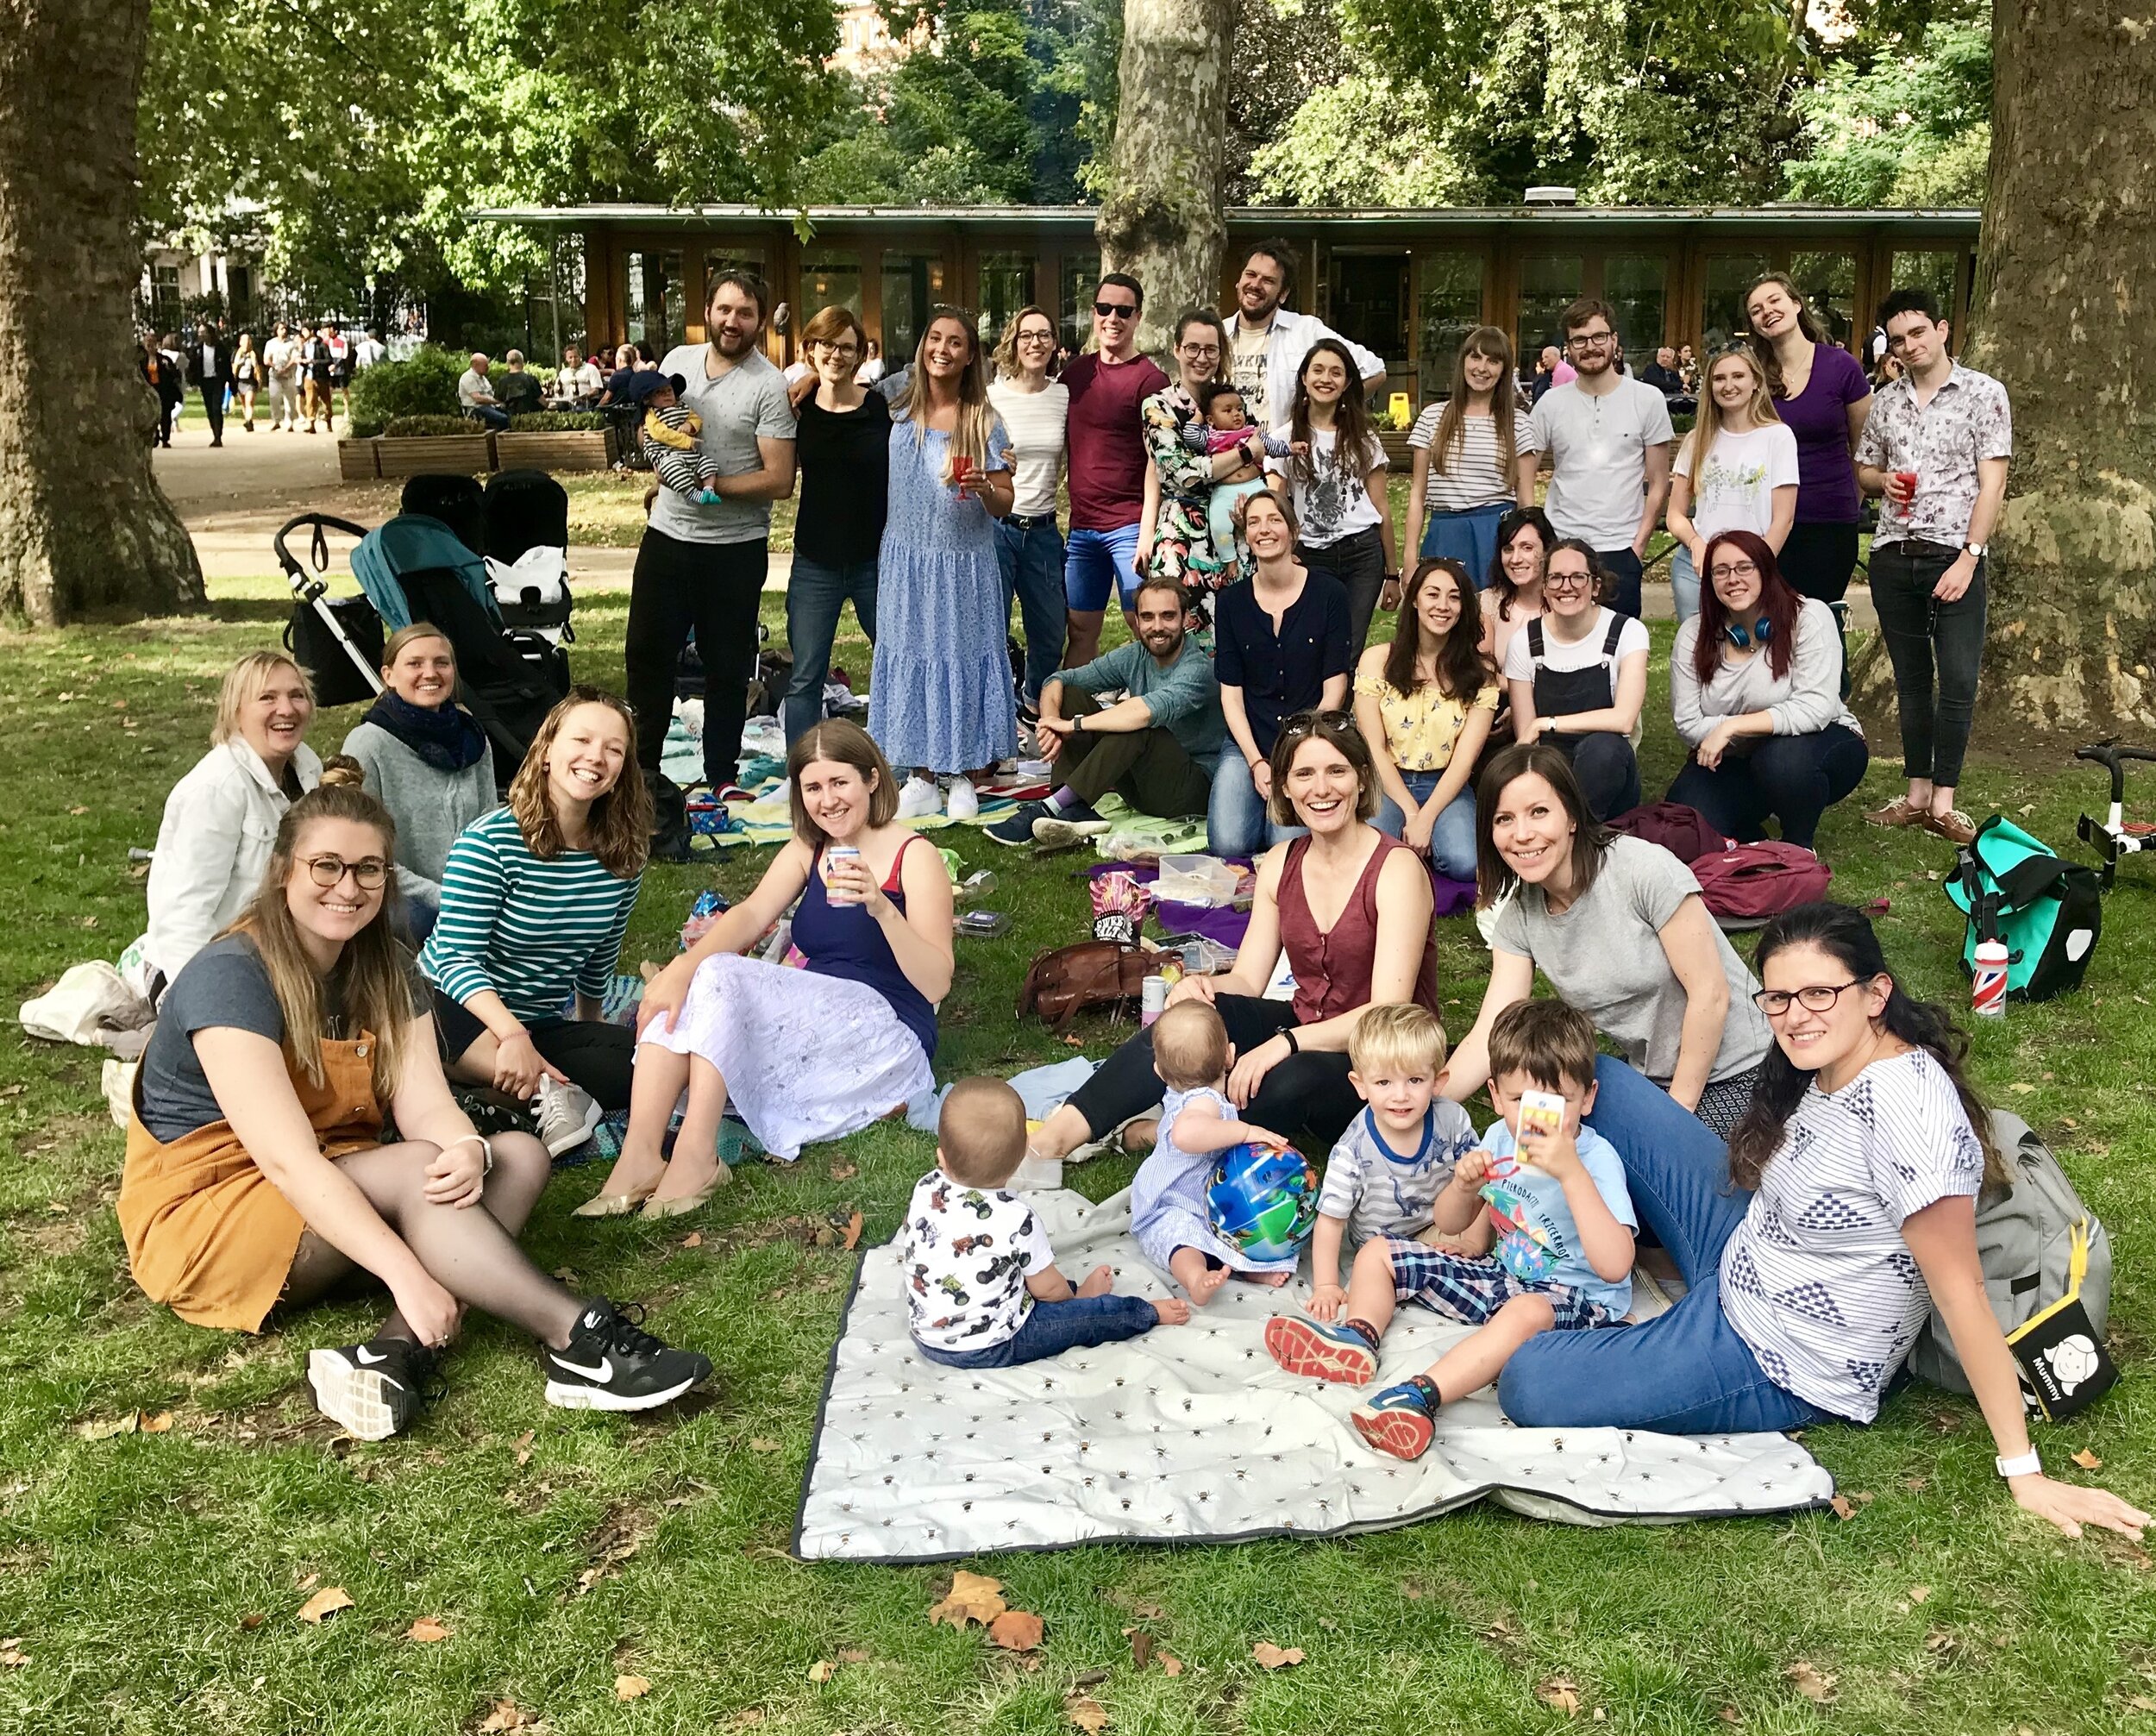 Annual Starling Arts picnic for community choir members, London